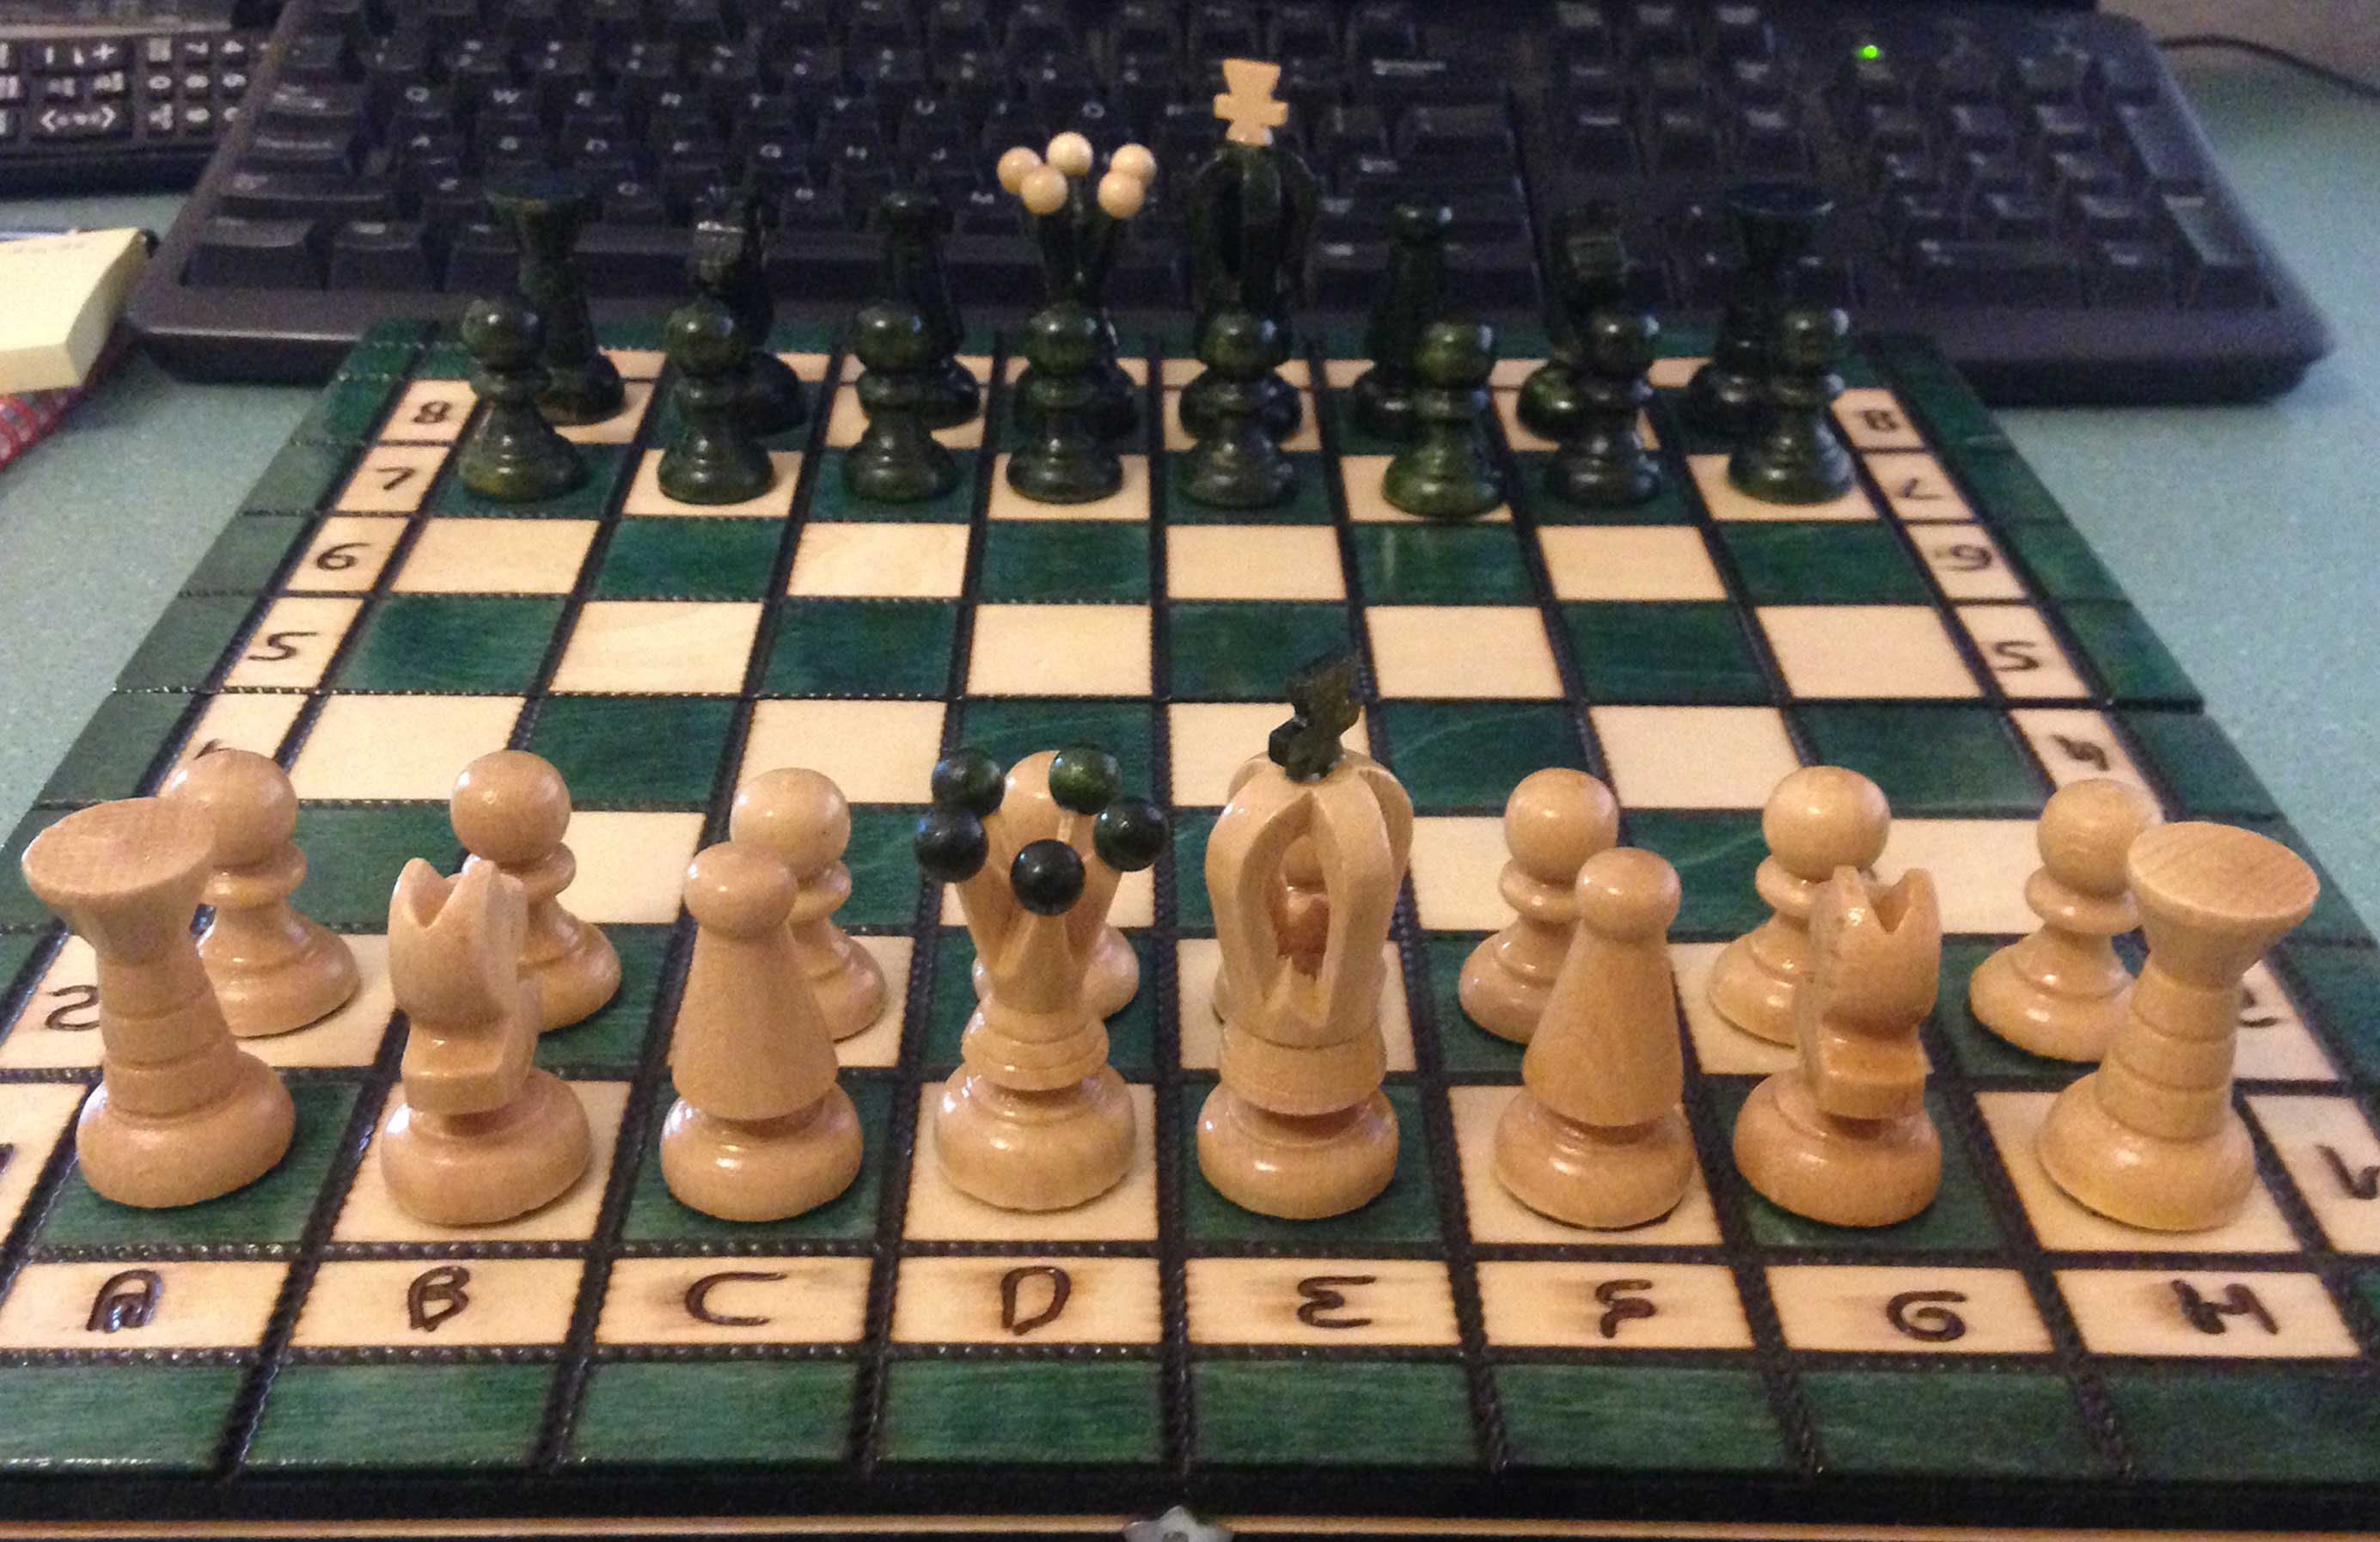 My chessboard